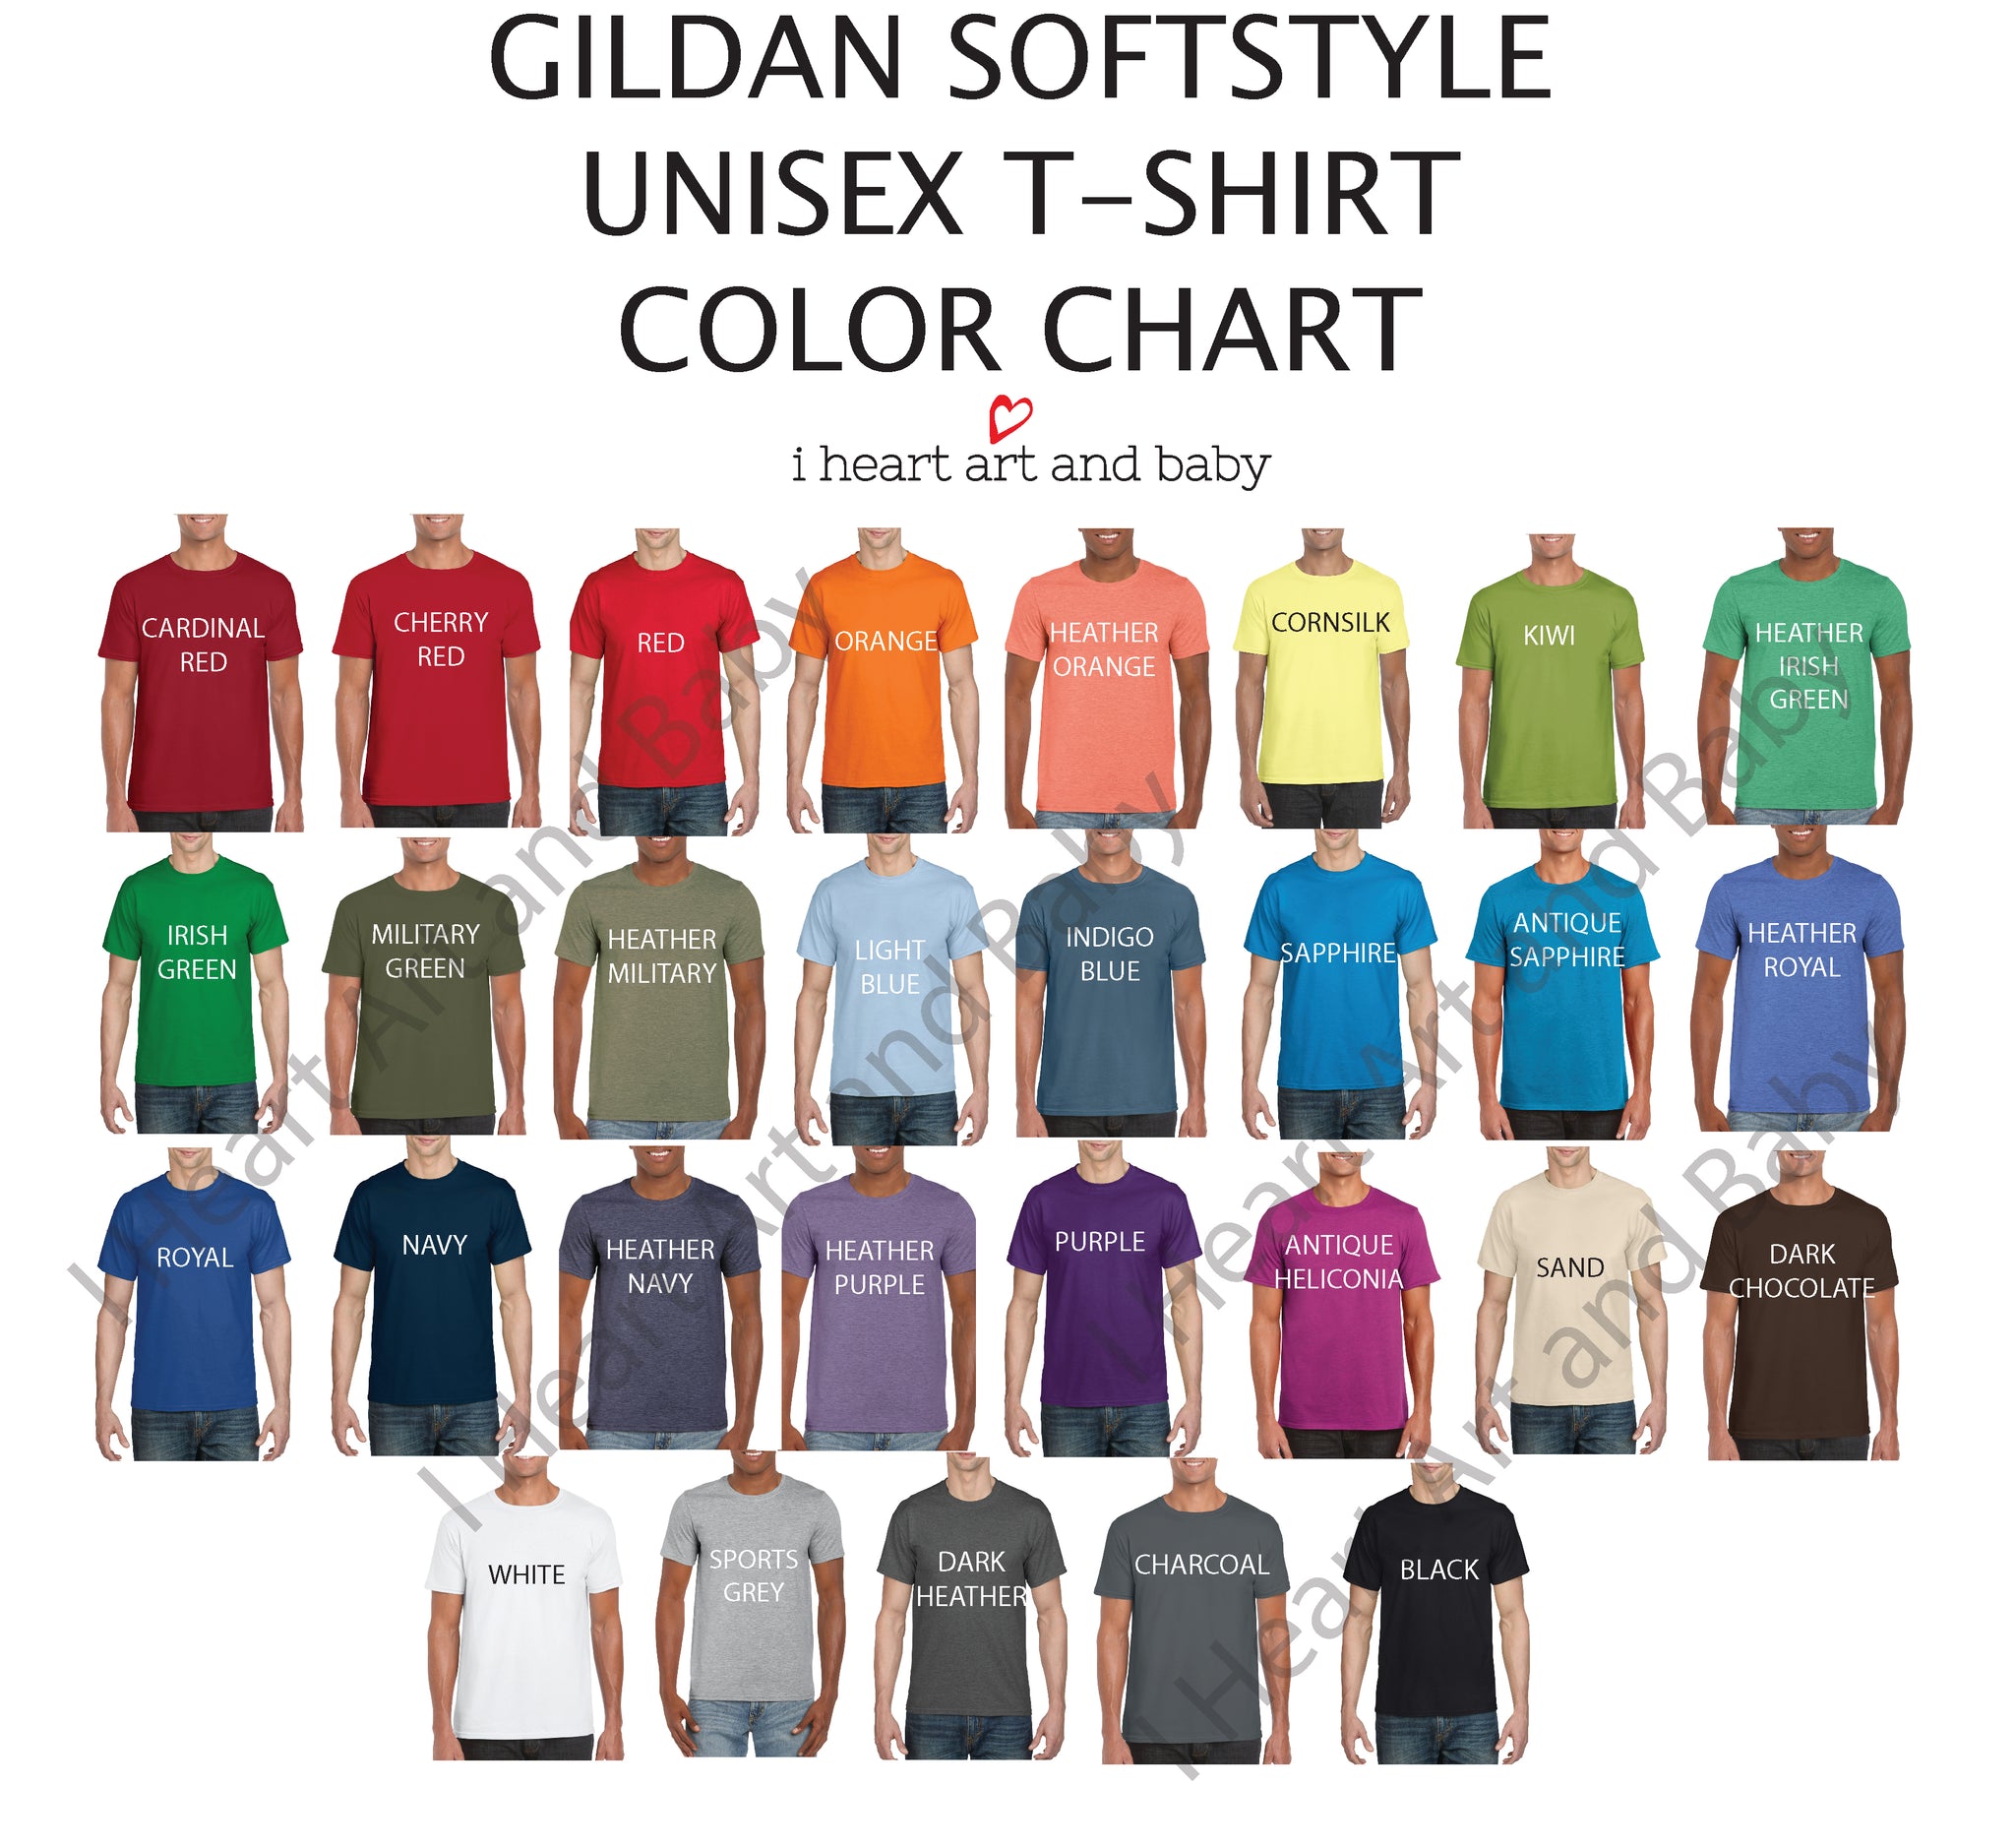 Gildan Softstyle